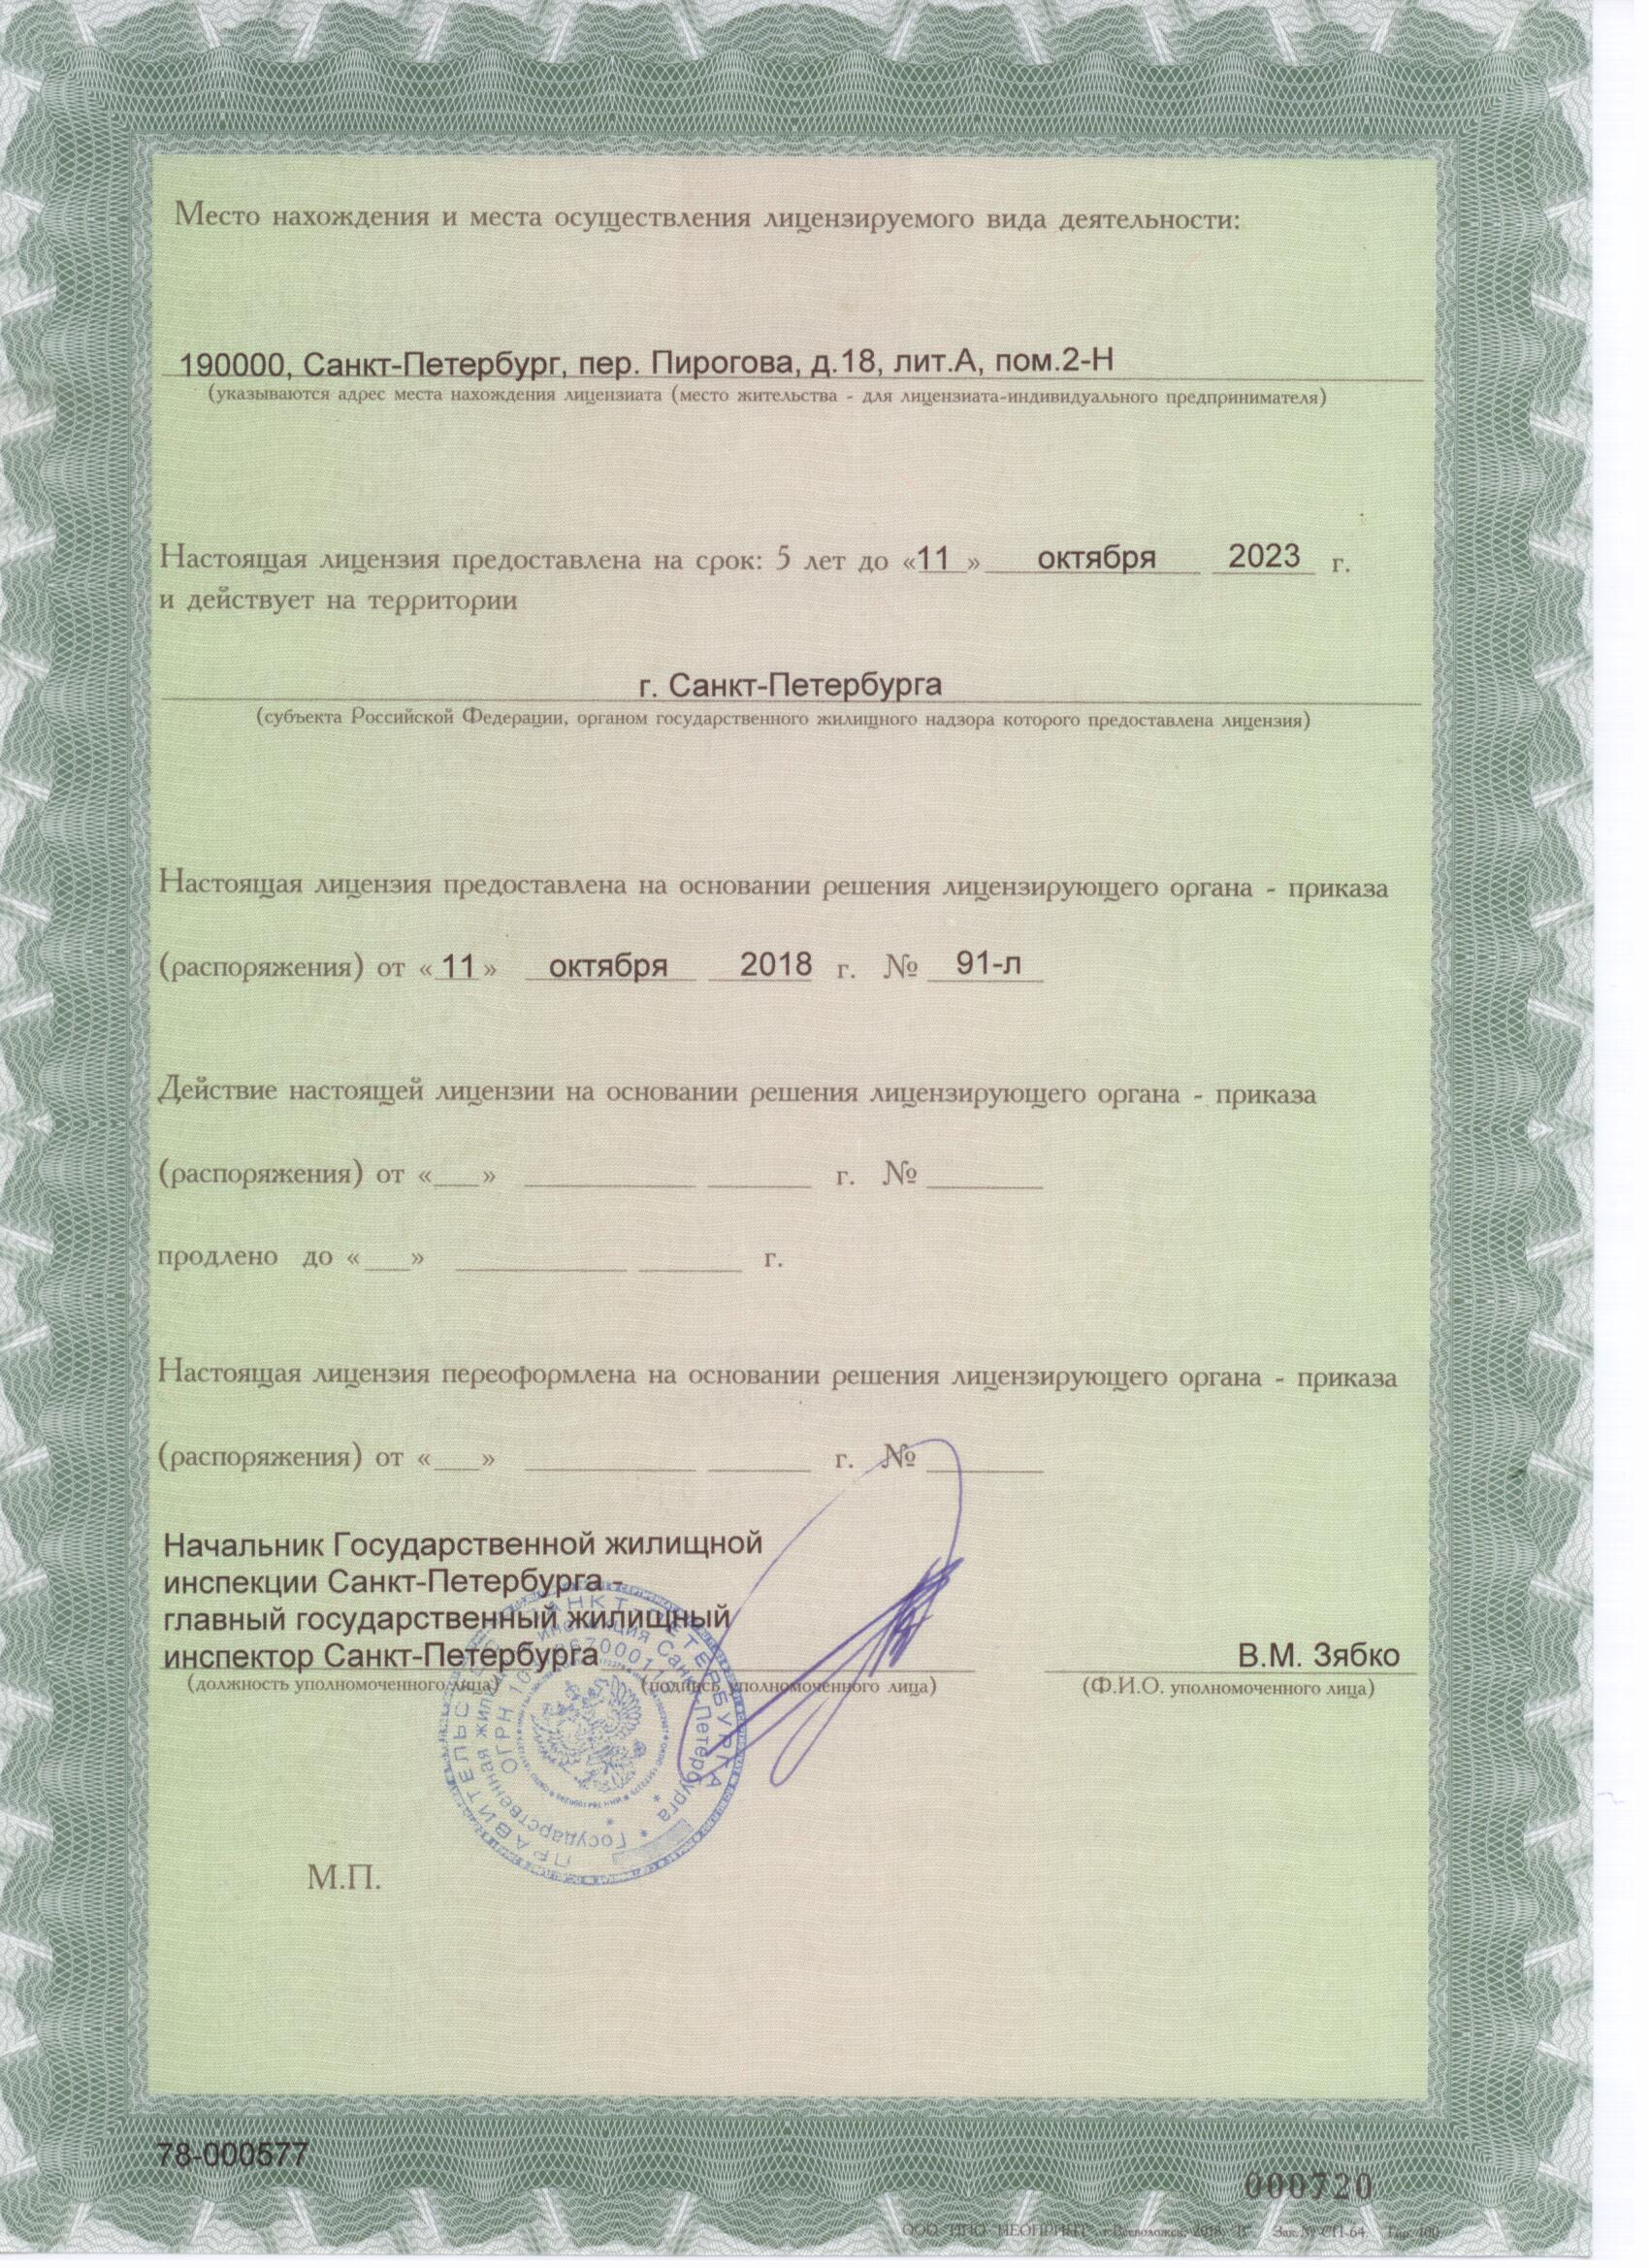 Лицензия на управление МКД №577 от 11.10.2018